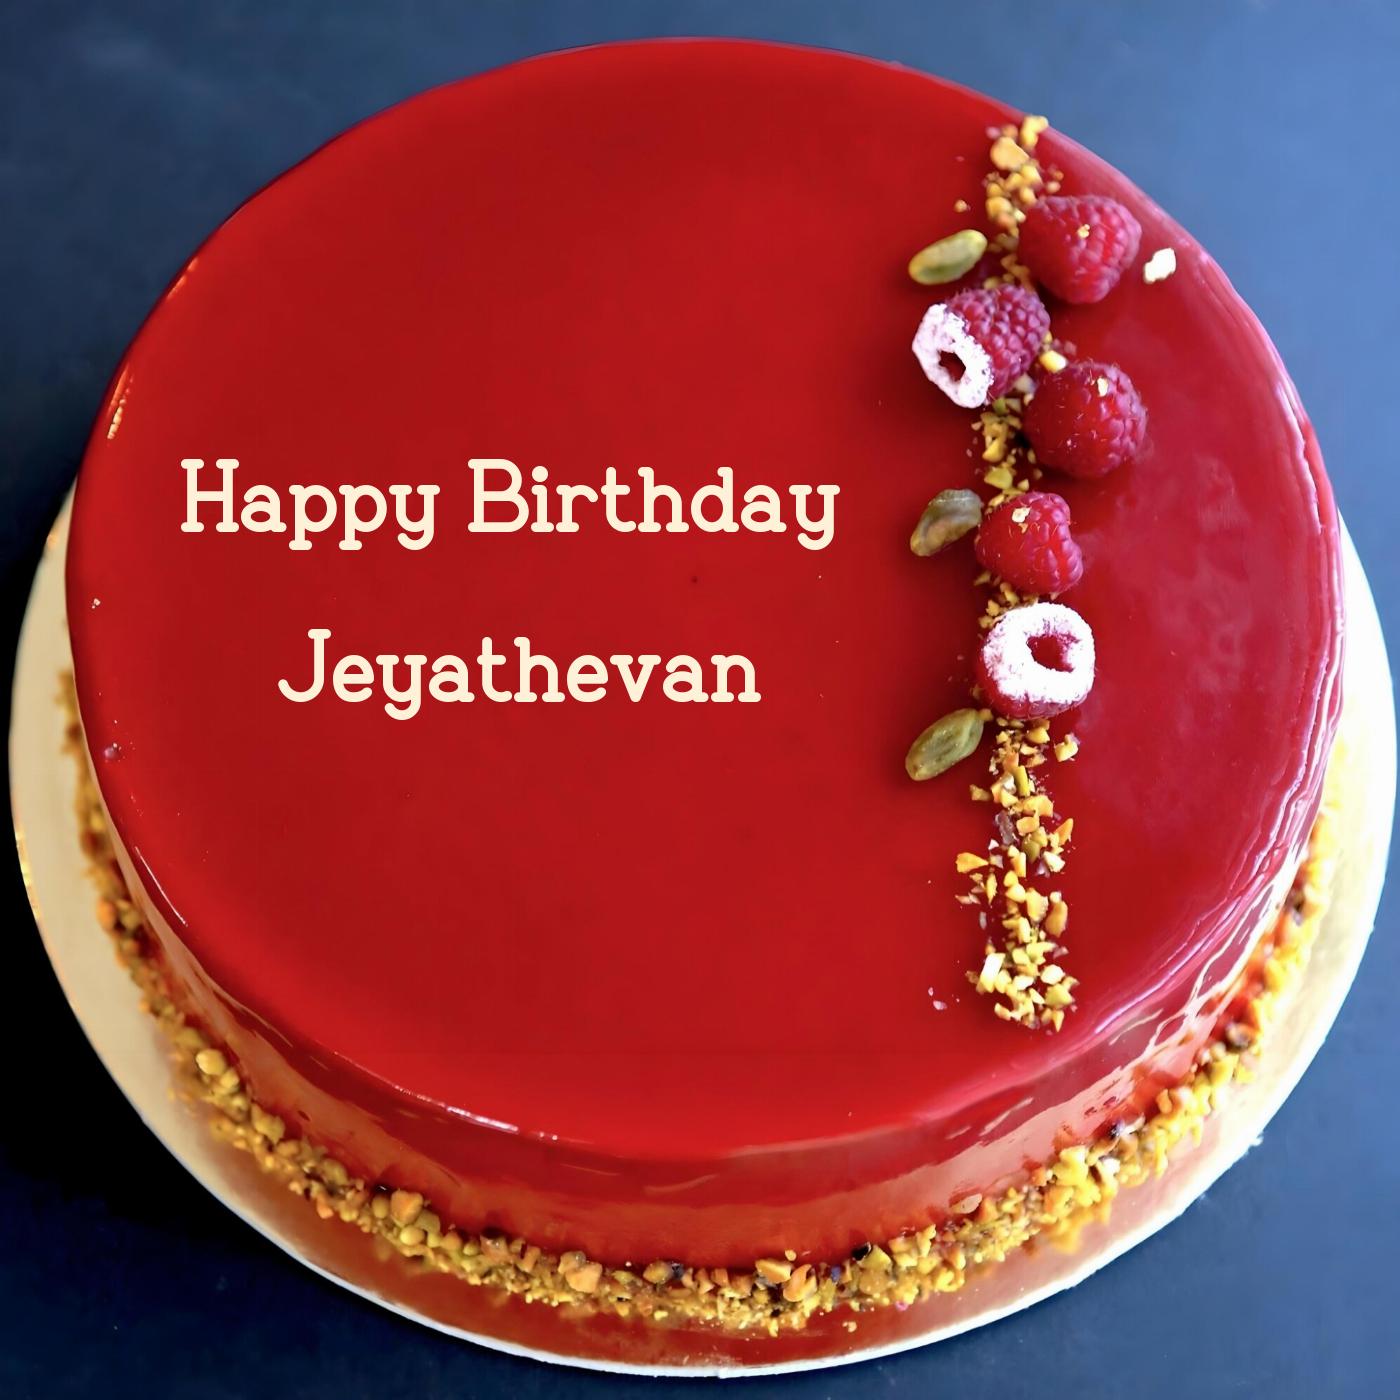 Happy Birthday Jeyathevan Red Raspberry Cake